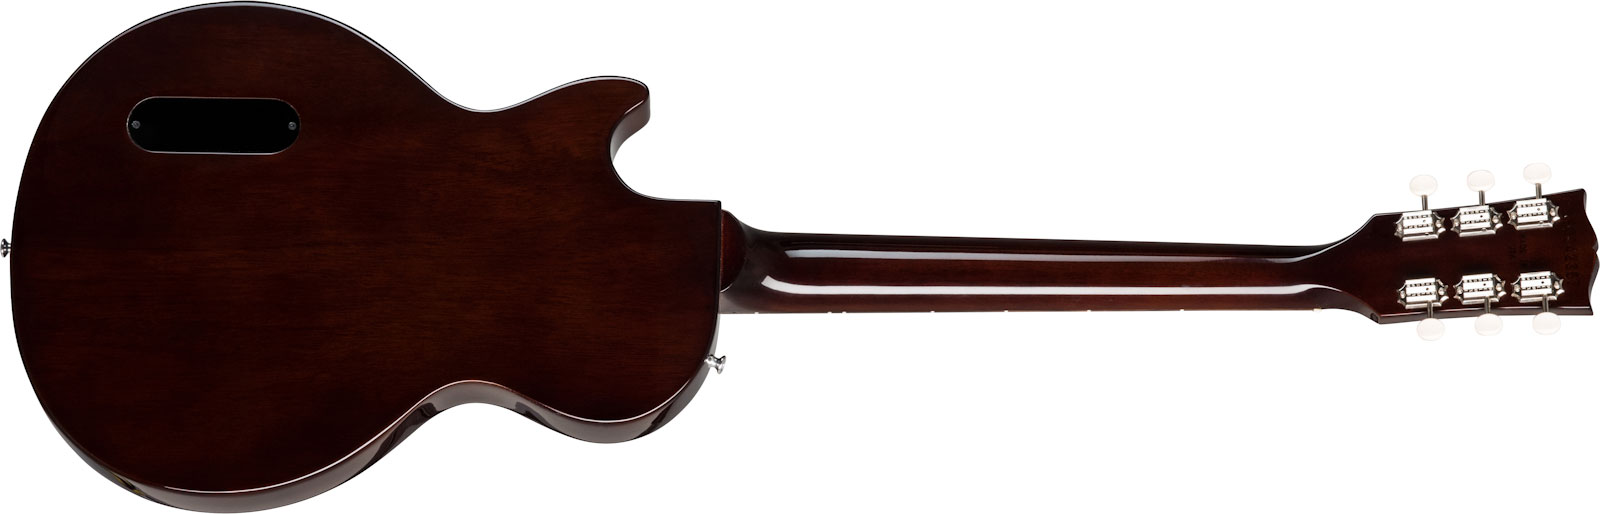 Gibson Les Paul Junior Original P90 Ht Rw - Vintage Tobacco Burst - Single-Cut-E-Gitarre - Variation 1